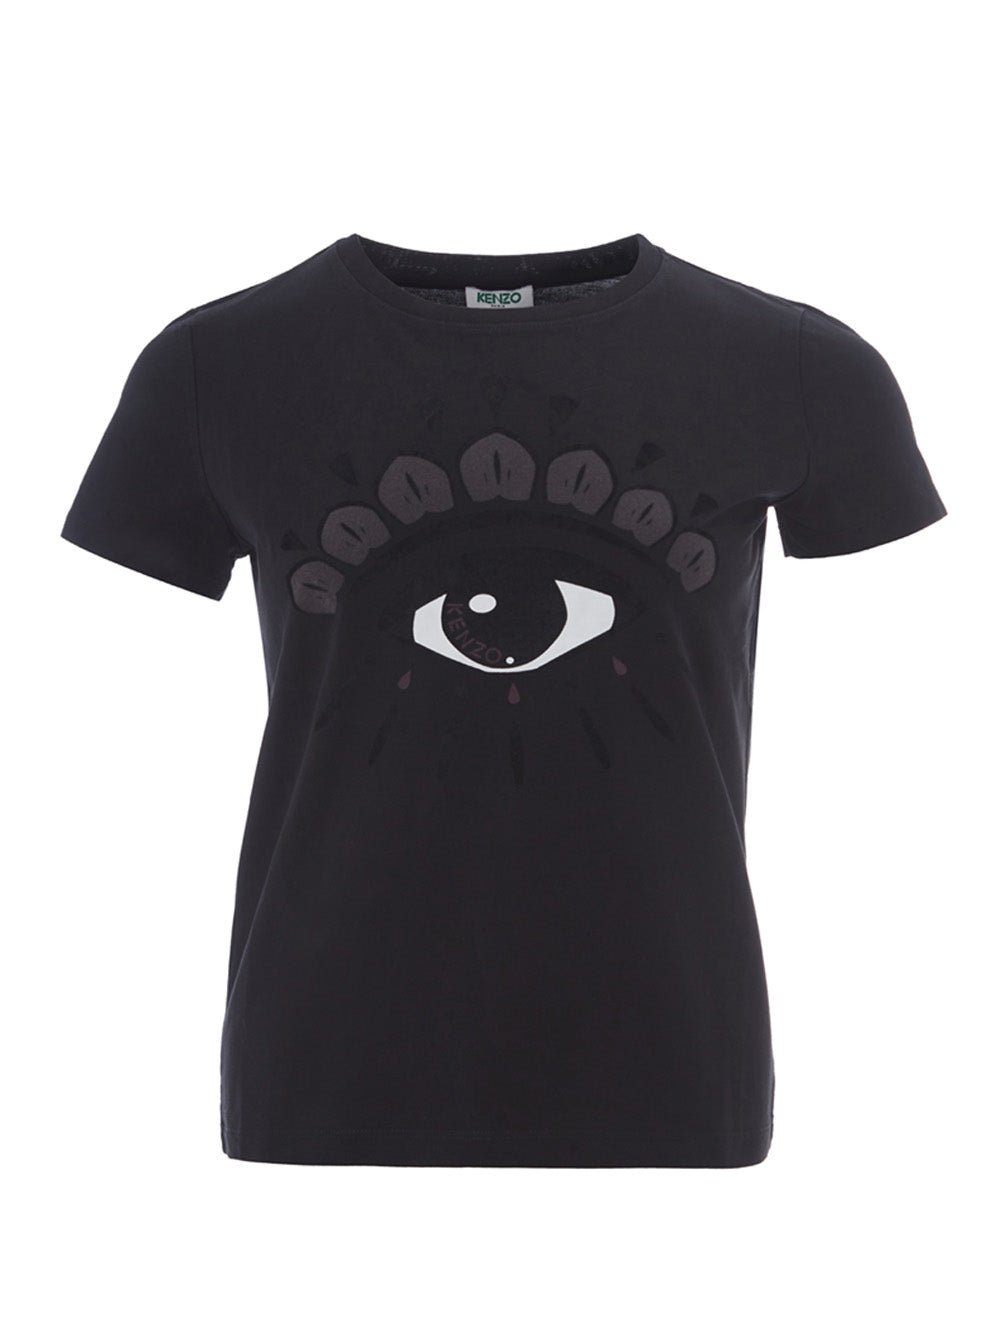 Kenzo Black Printed Cotton Eye T-Shirt